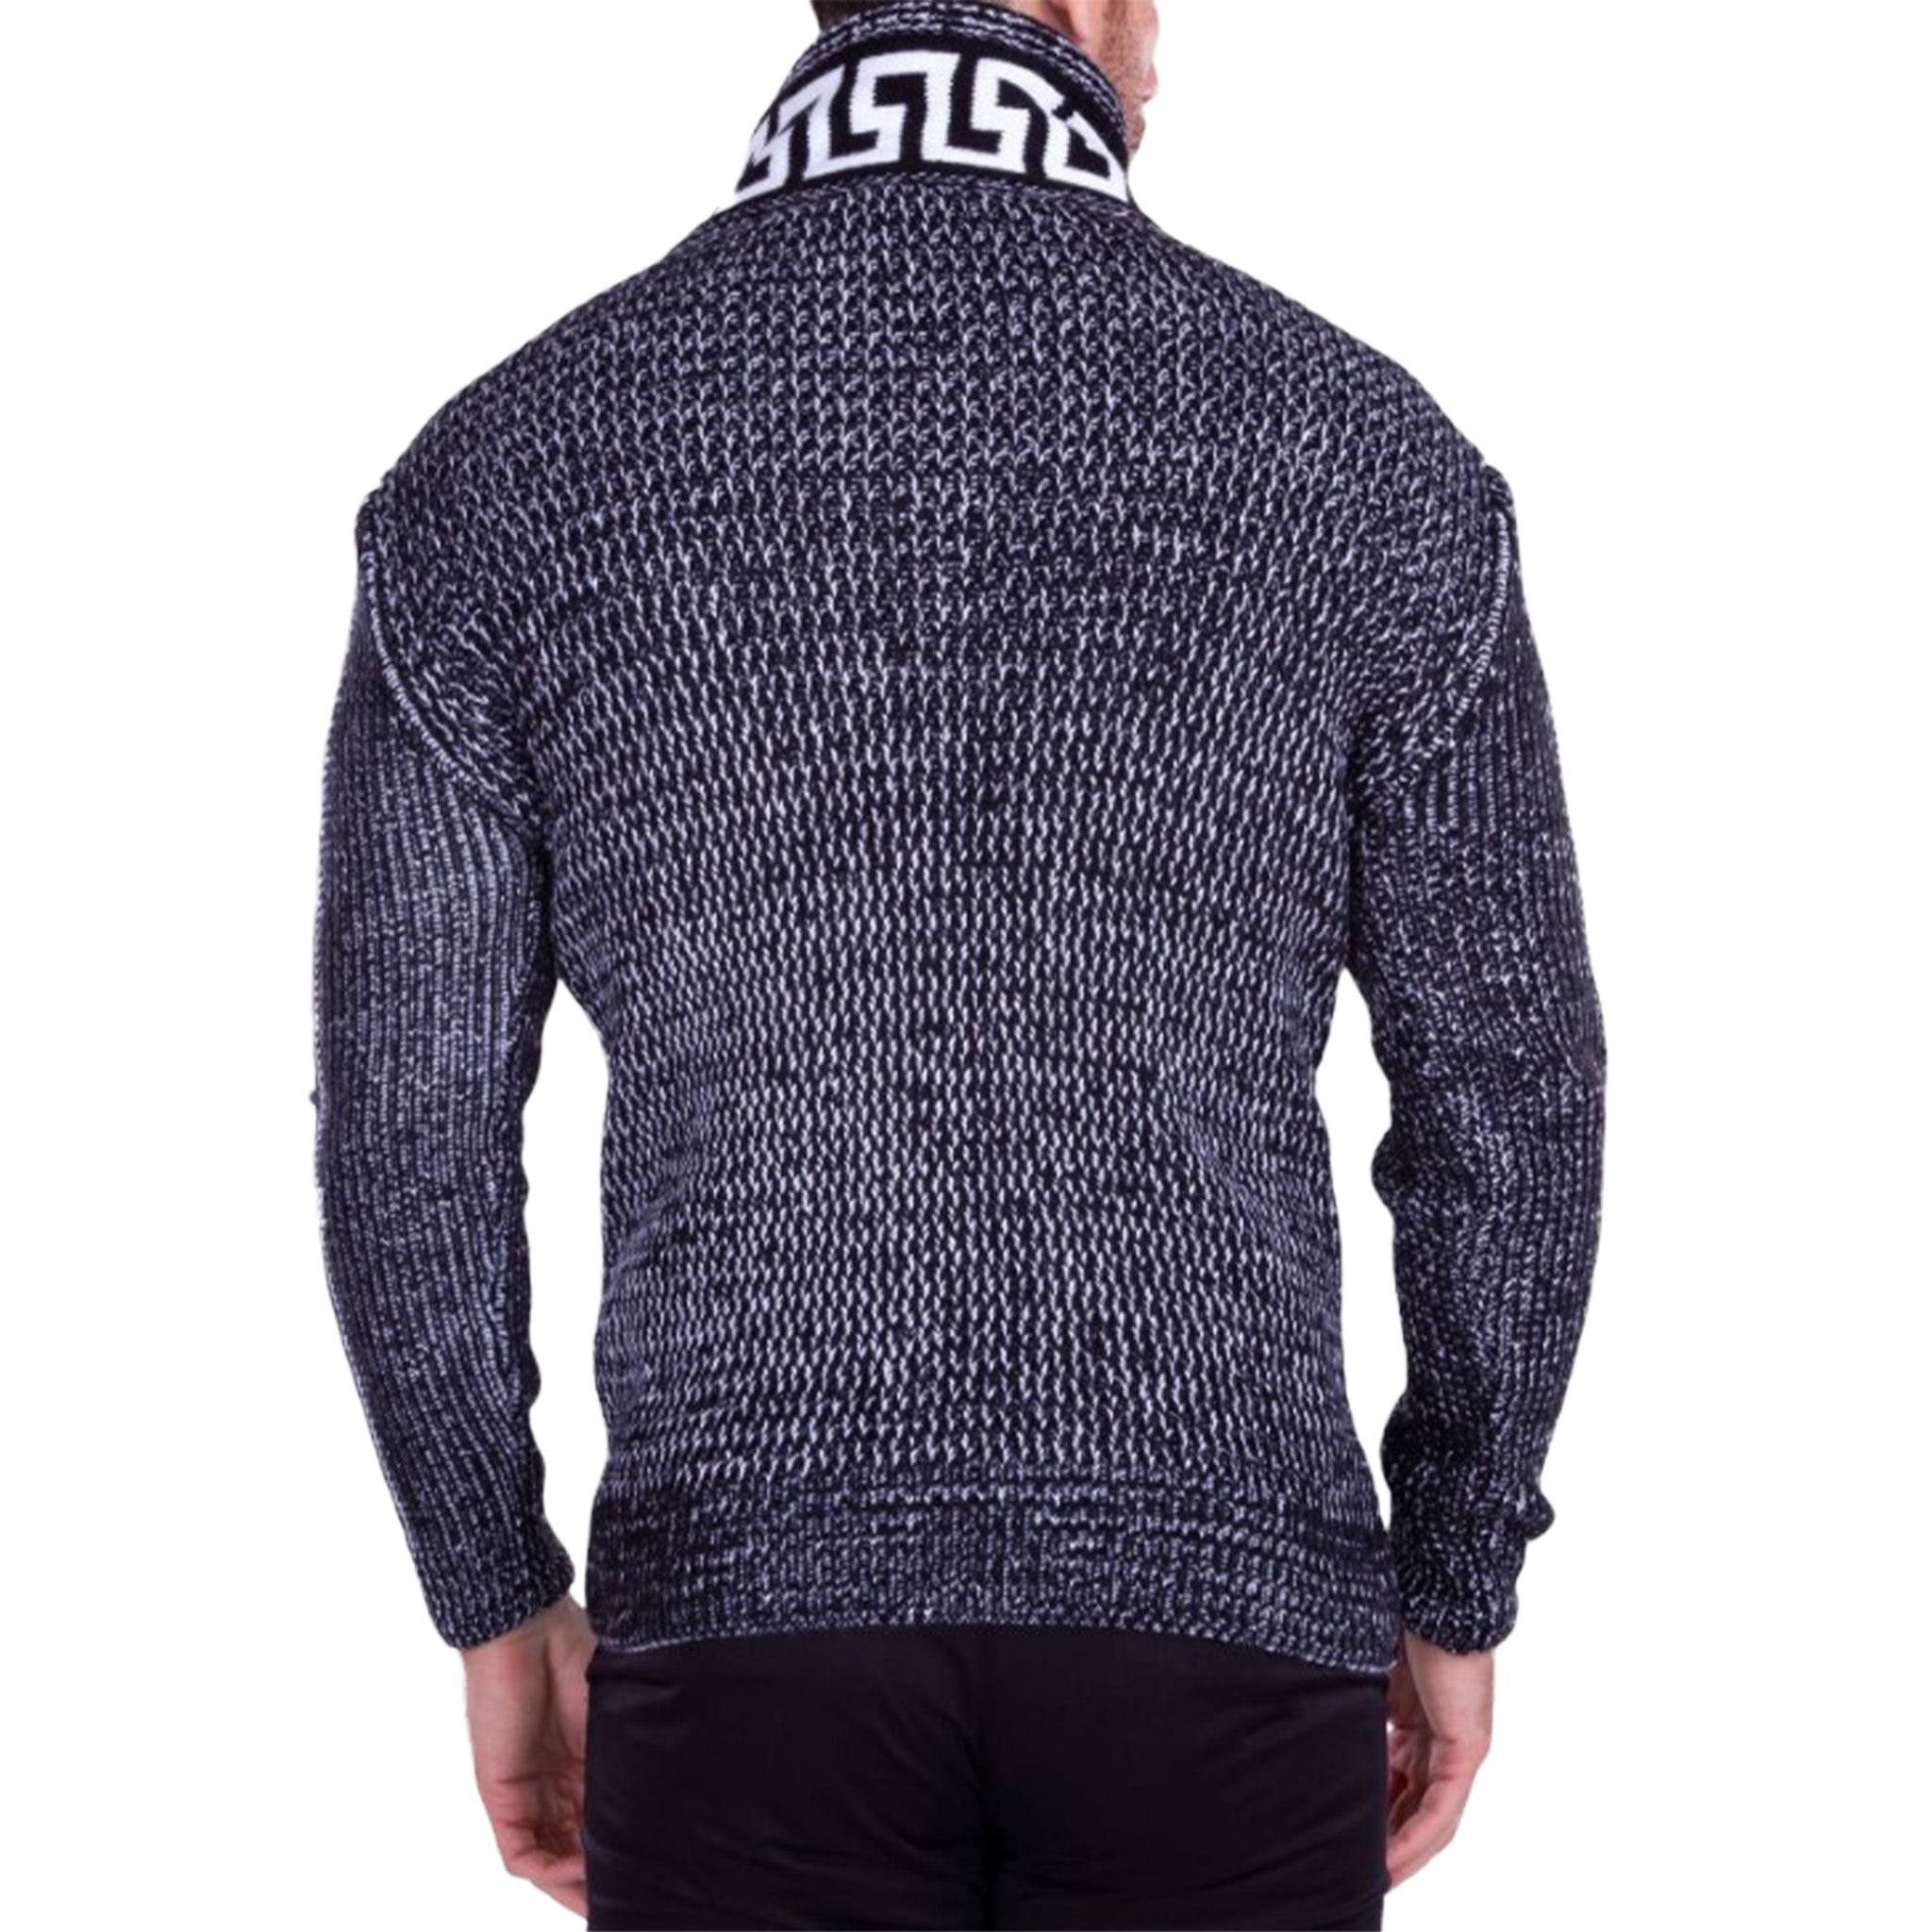 Black Fashion Cowl Neck Sweater